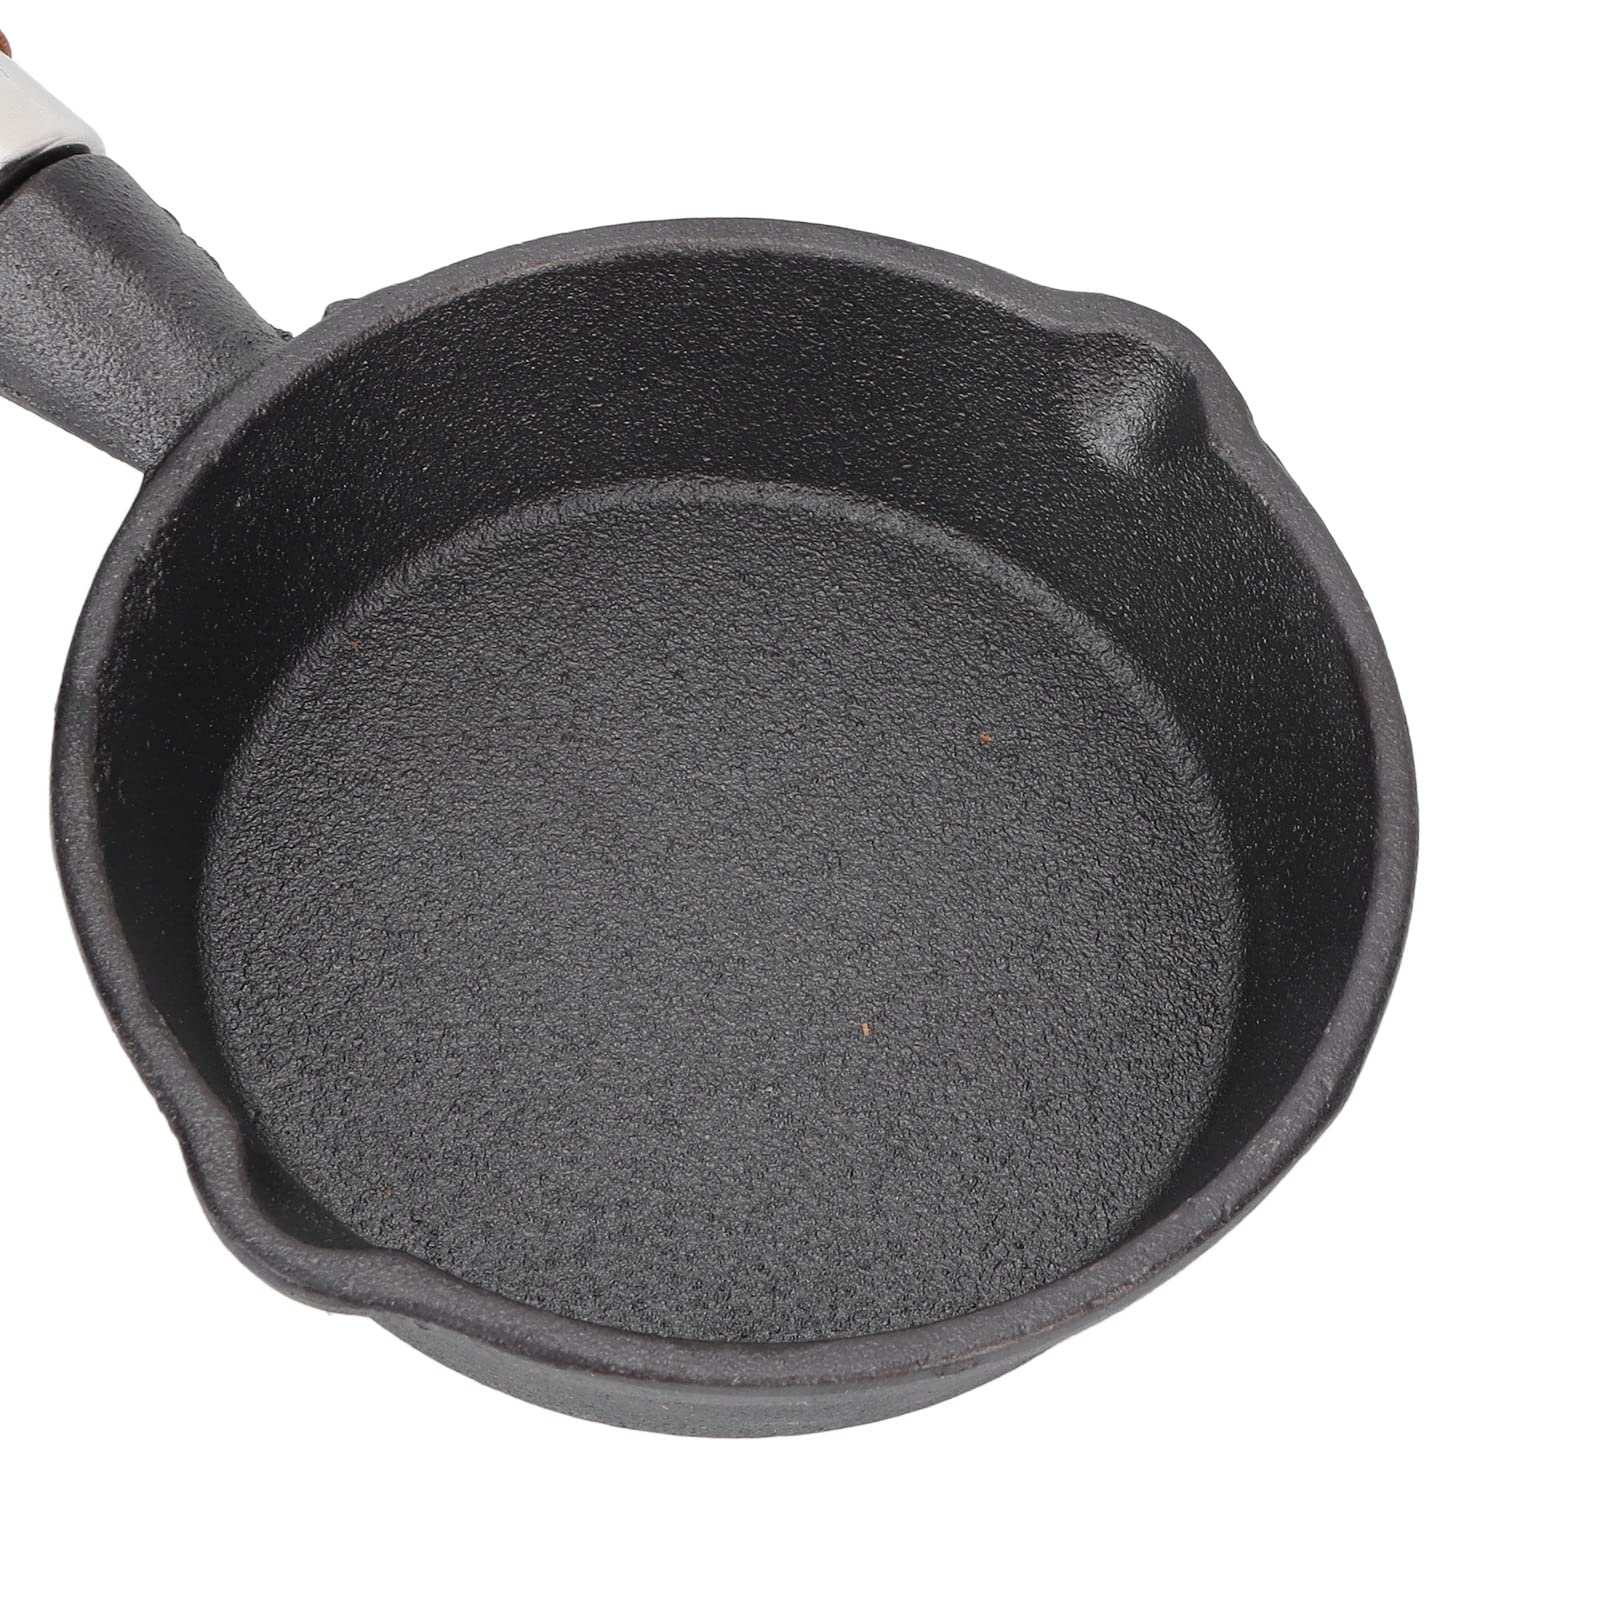 Fdit Frying Pan, 10CM Casting Iron Pan with Wood Handle Egg Frying Pan Skillet Mini Flat Bottomed Pancake Pan Cookware Kitchen Utensils